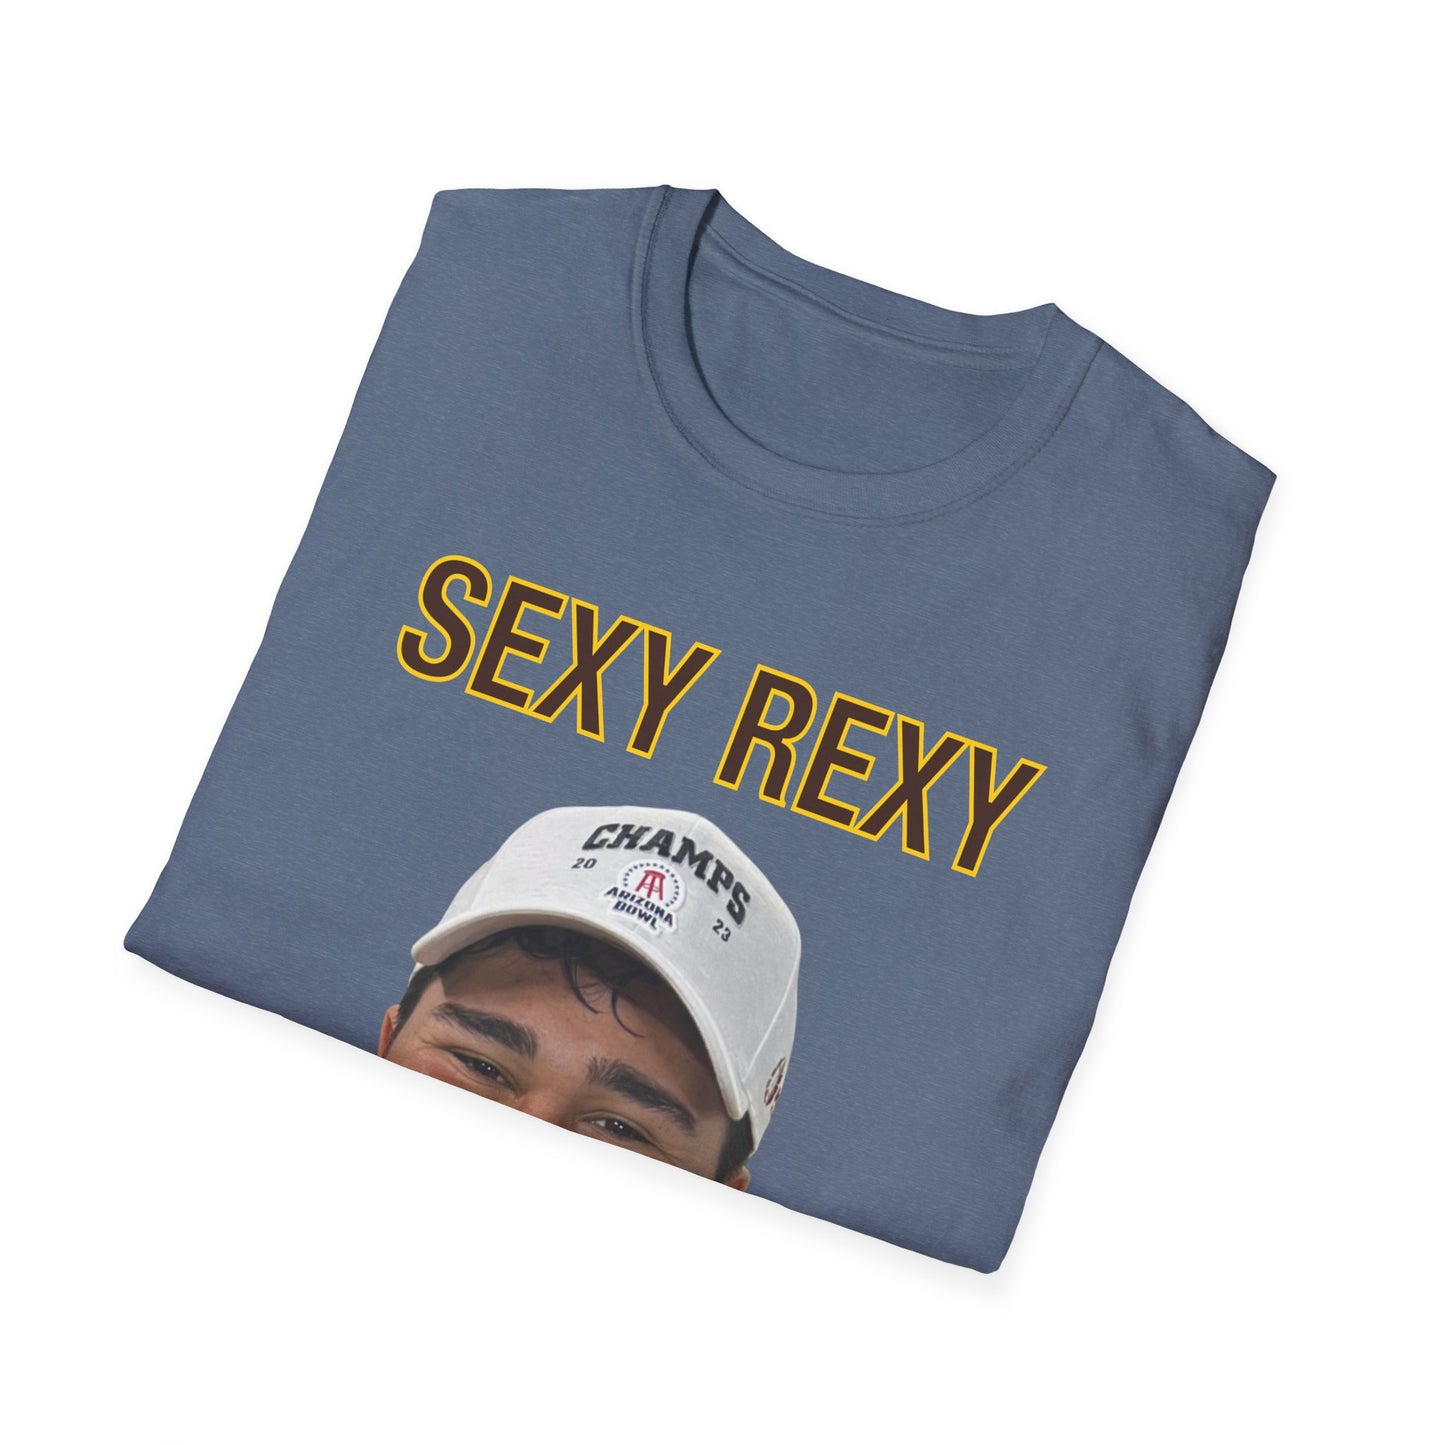 Sexy Rexy With Rex's Face